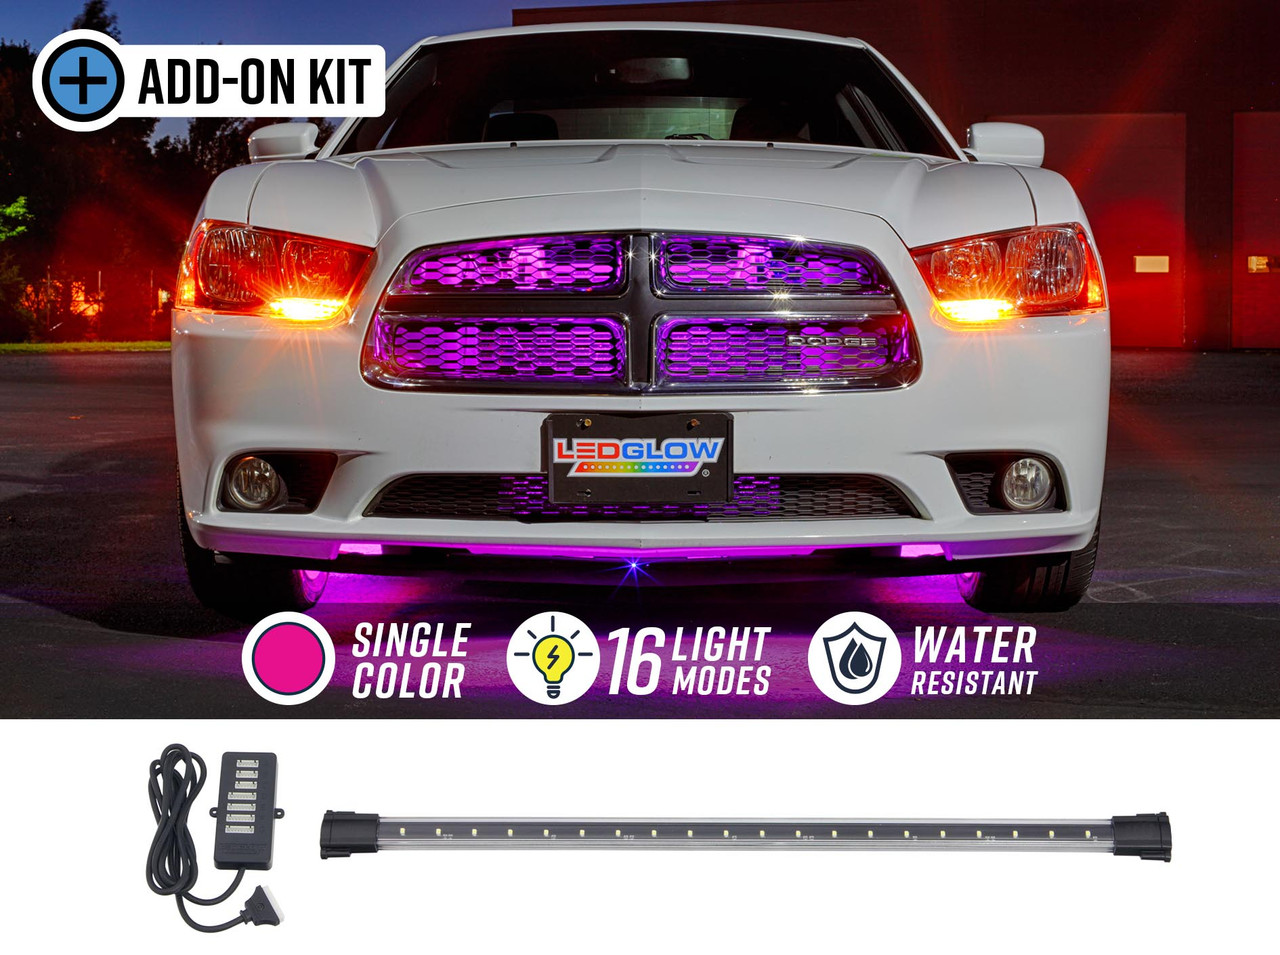 Pink Wireless LED Car Underbody Lighting Kit